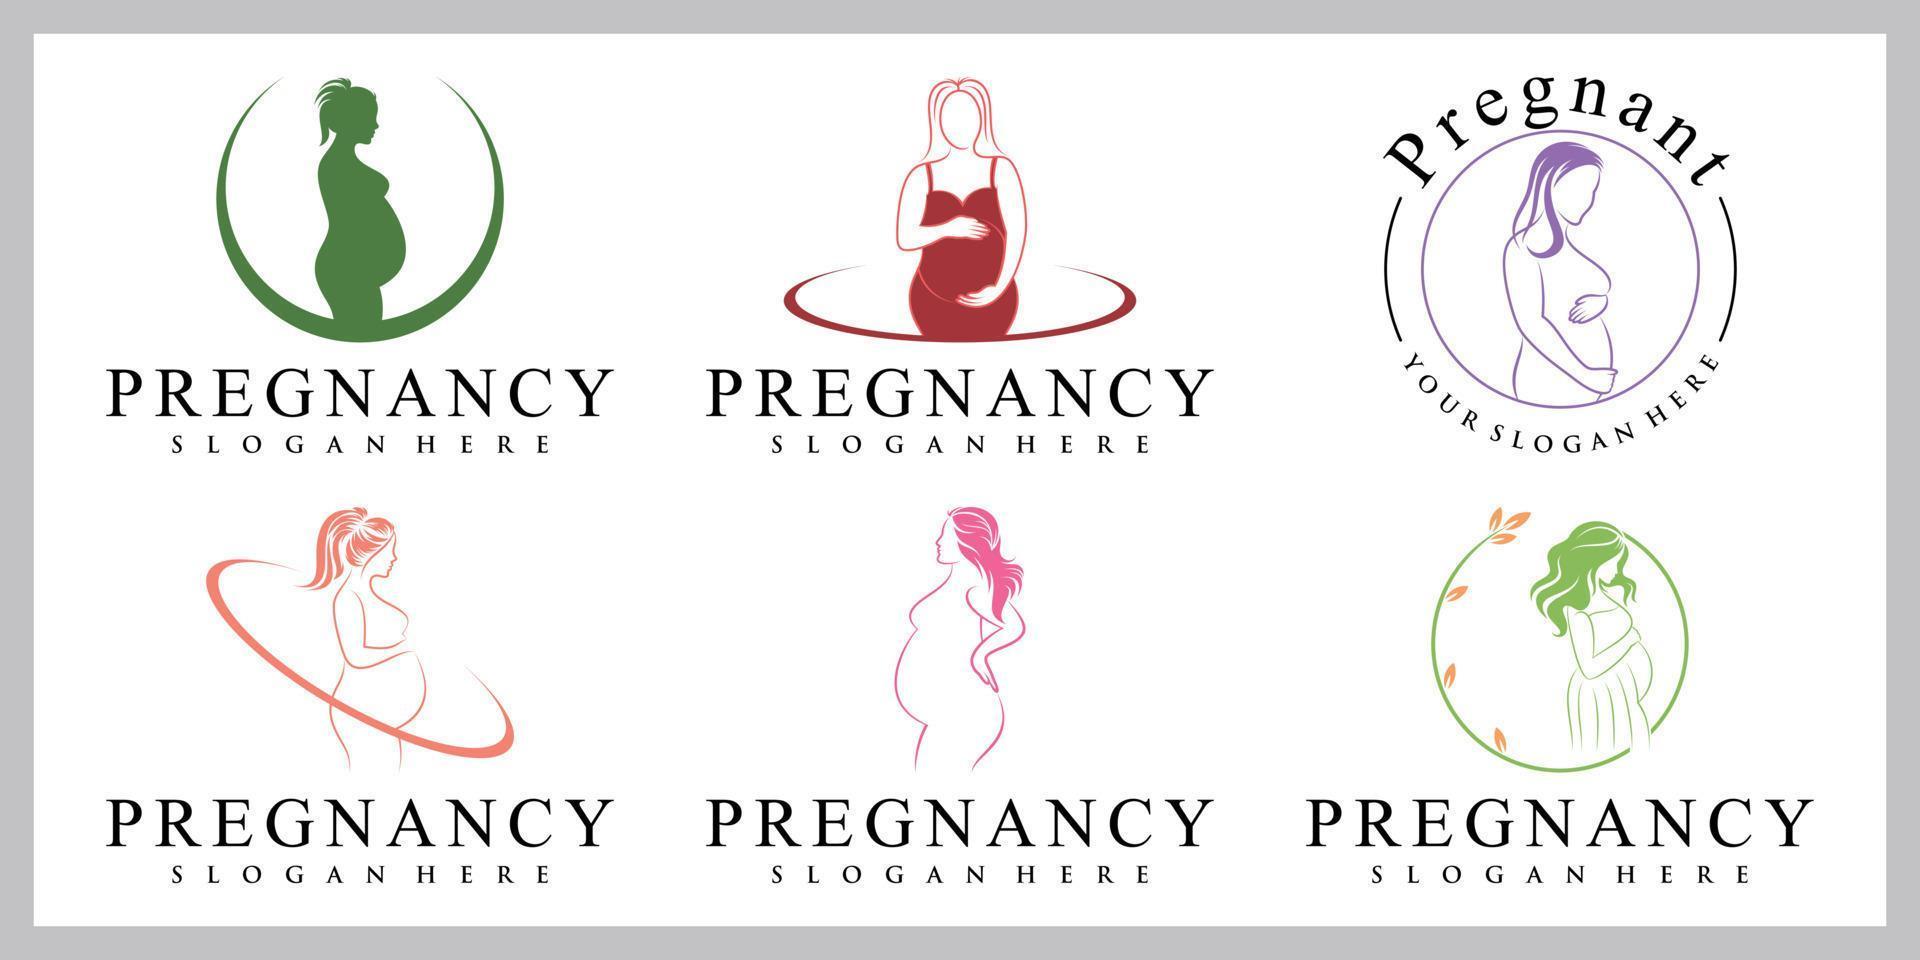 Pregnant woman icon set logo template with creative unique concept vector